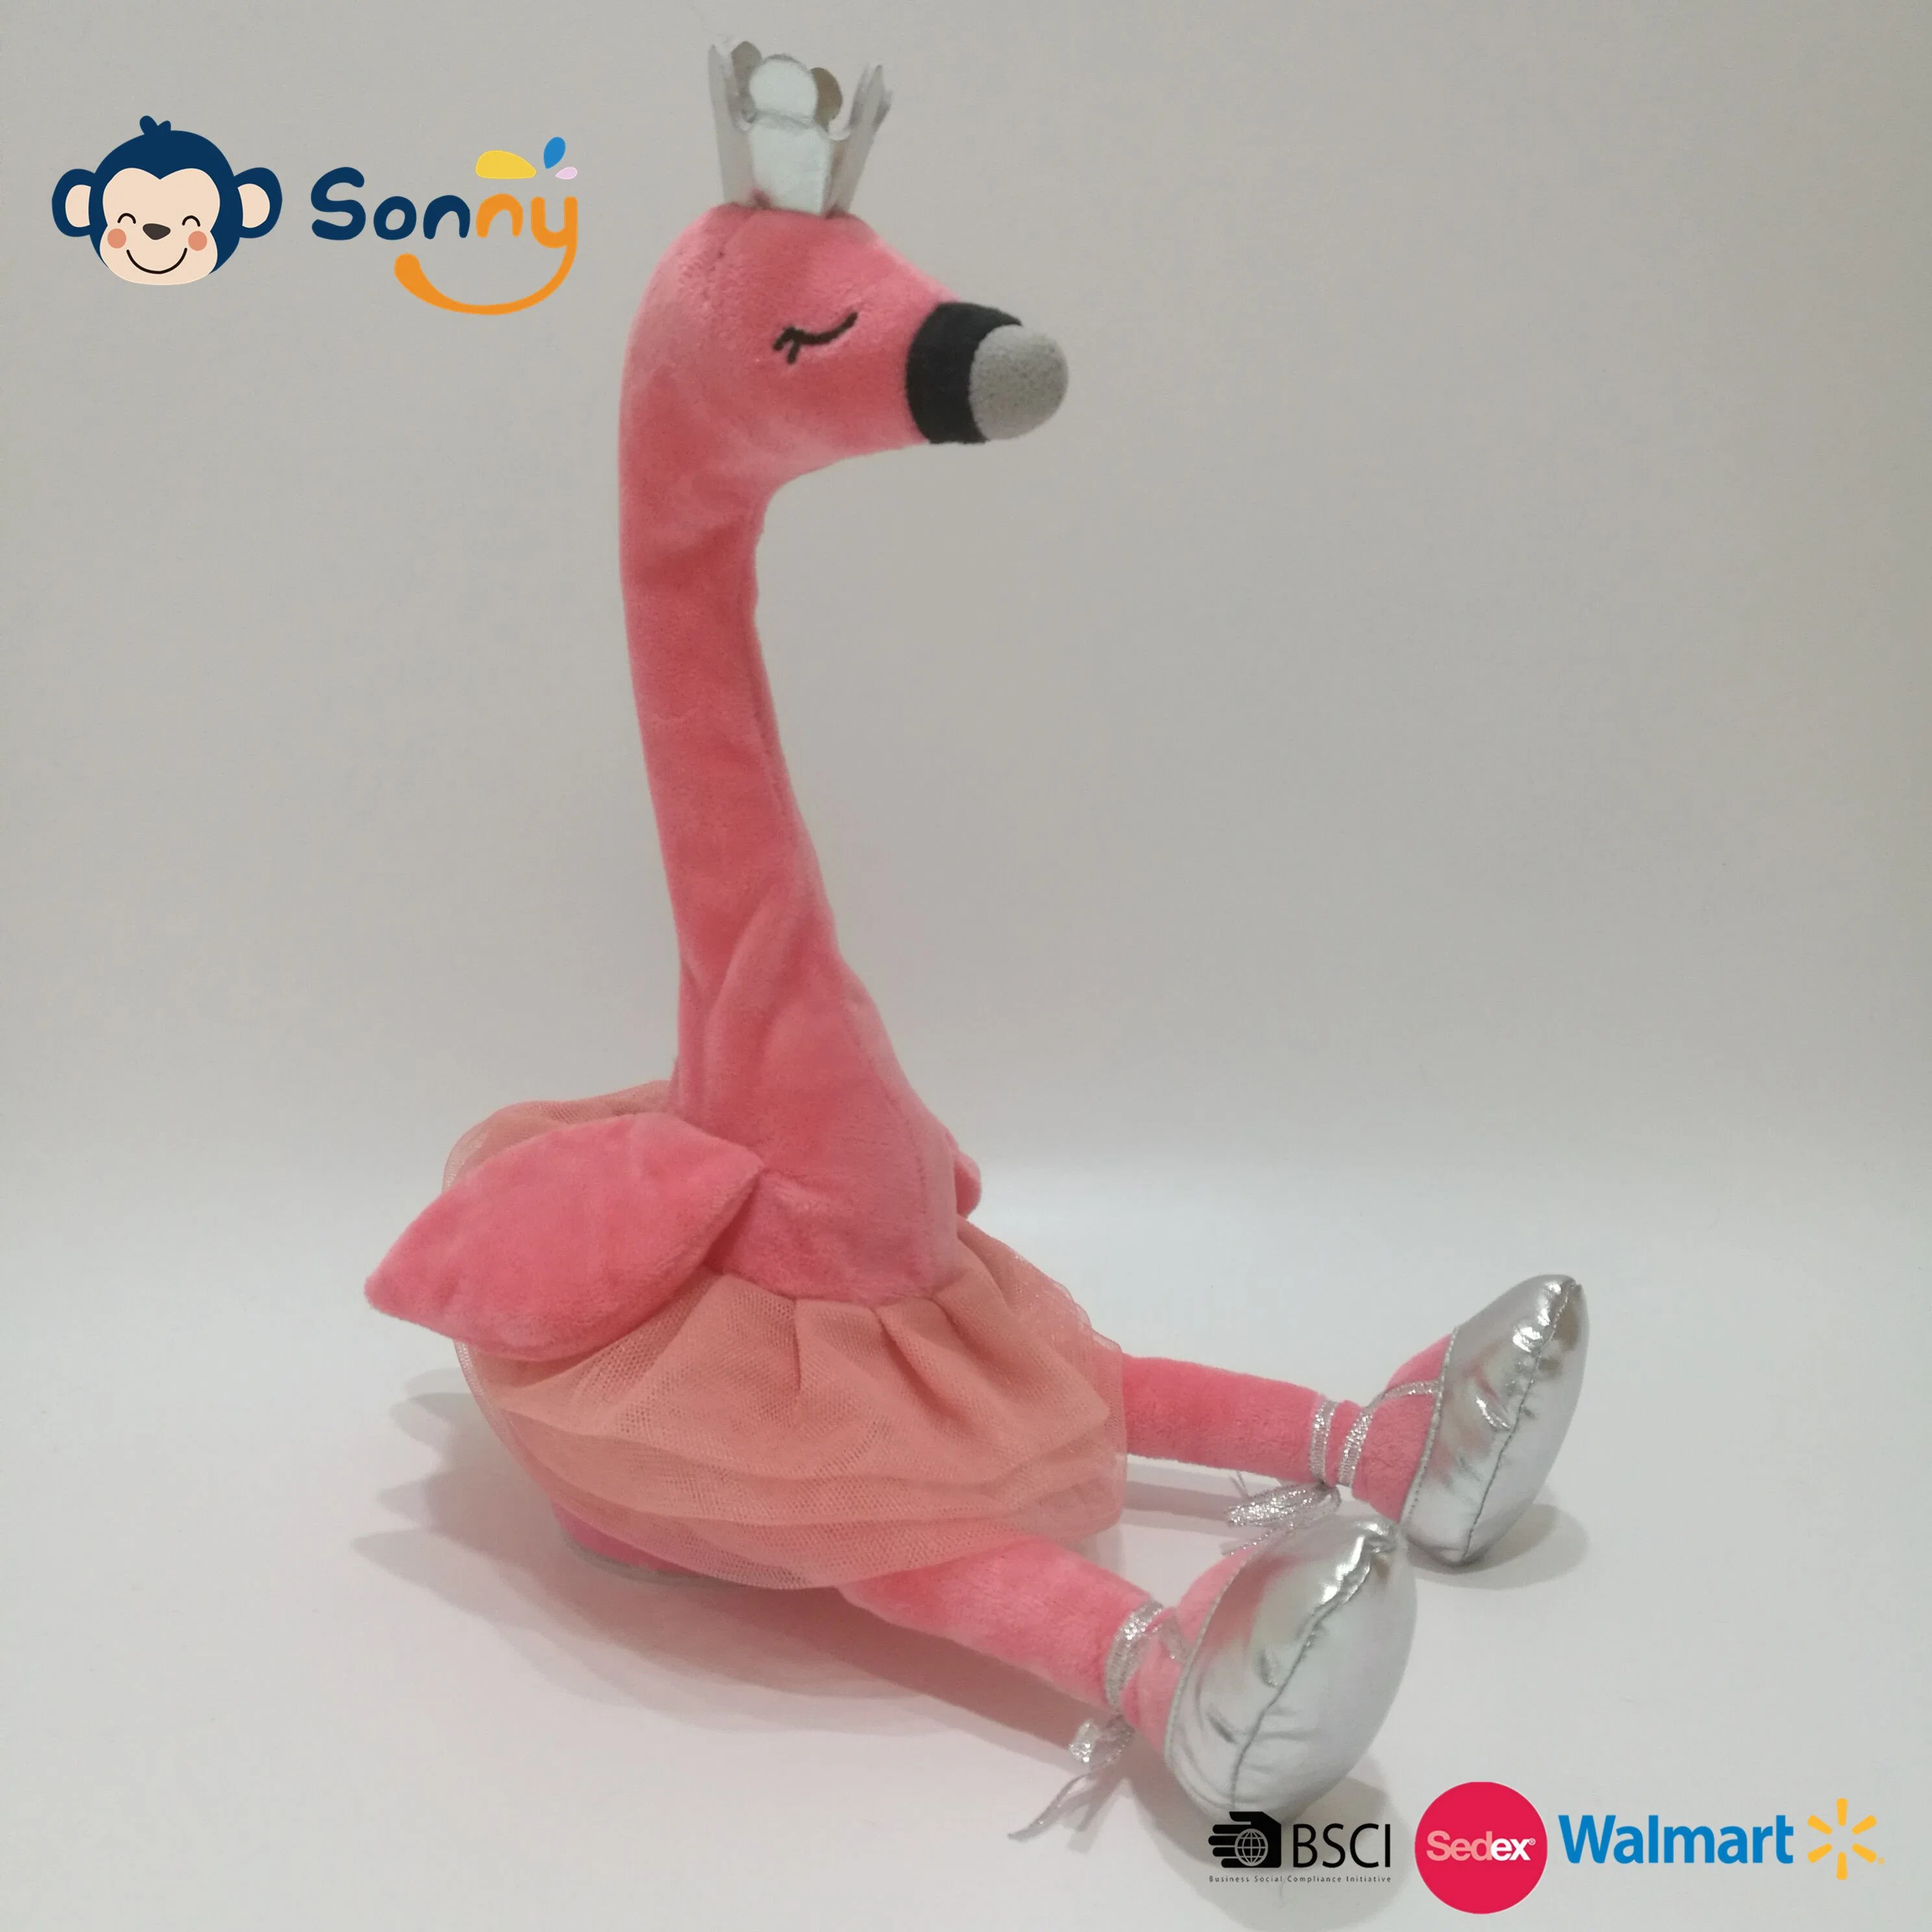 Best-Selling Plush Recording & Repeating Ballet Shoe Flamingo Talking Back Plush Toy BSCI Audit